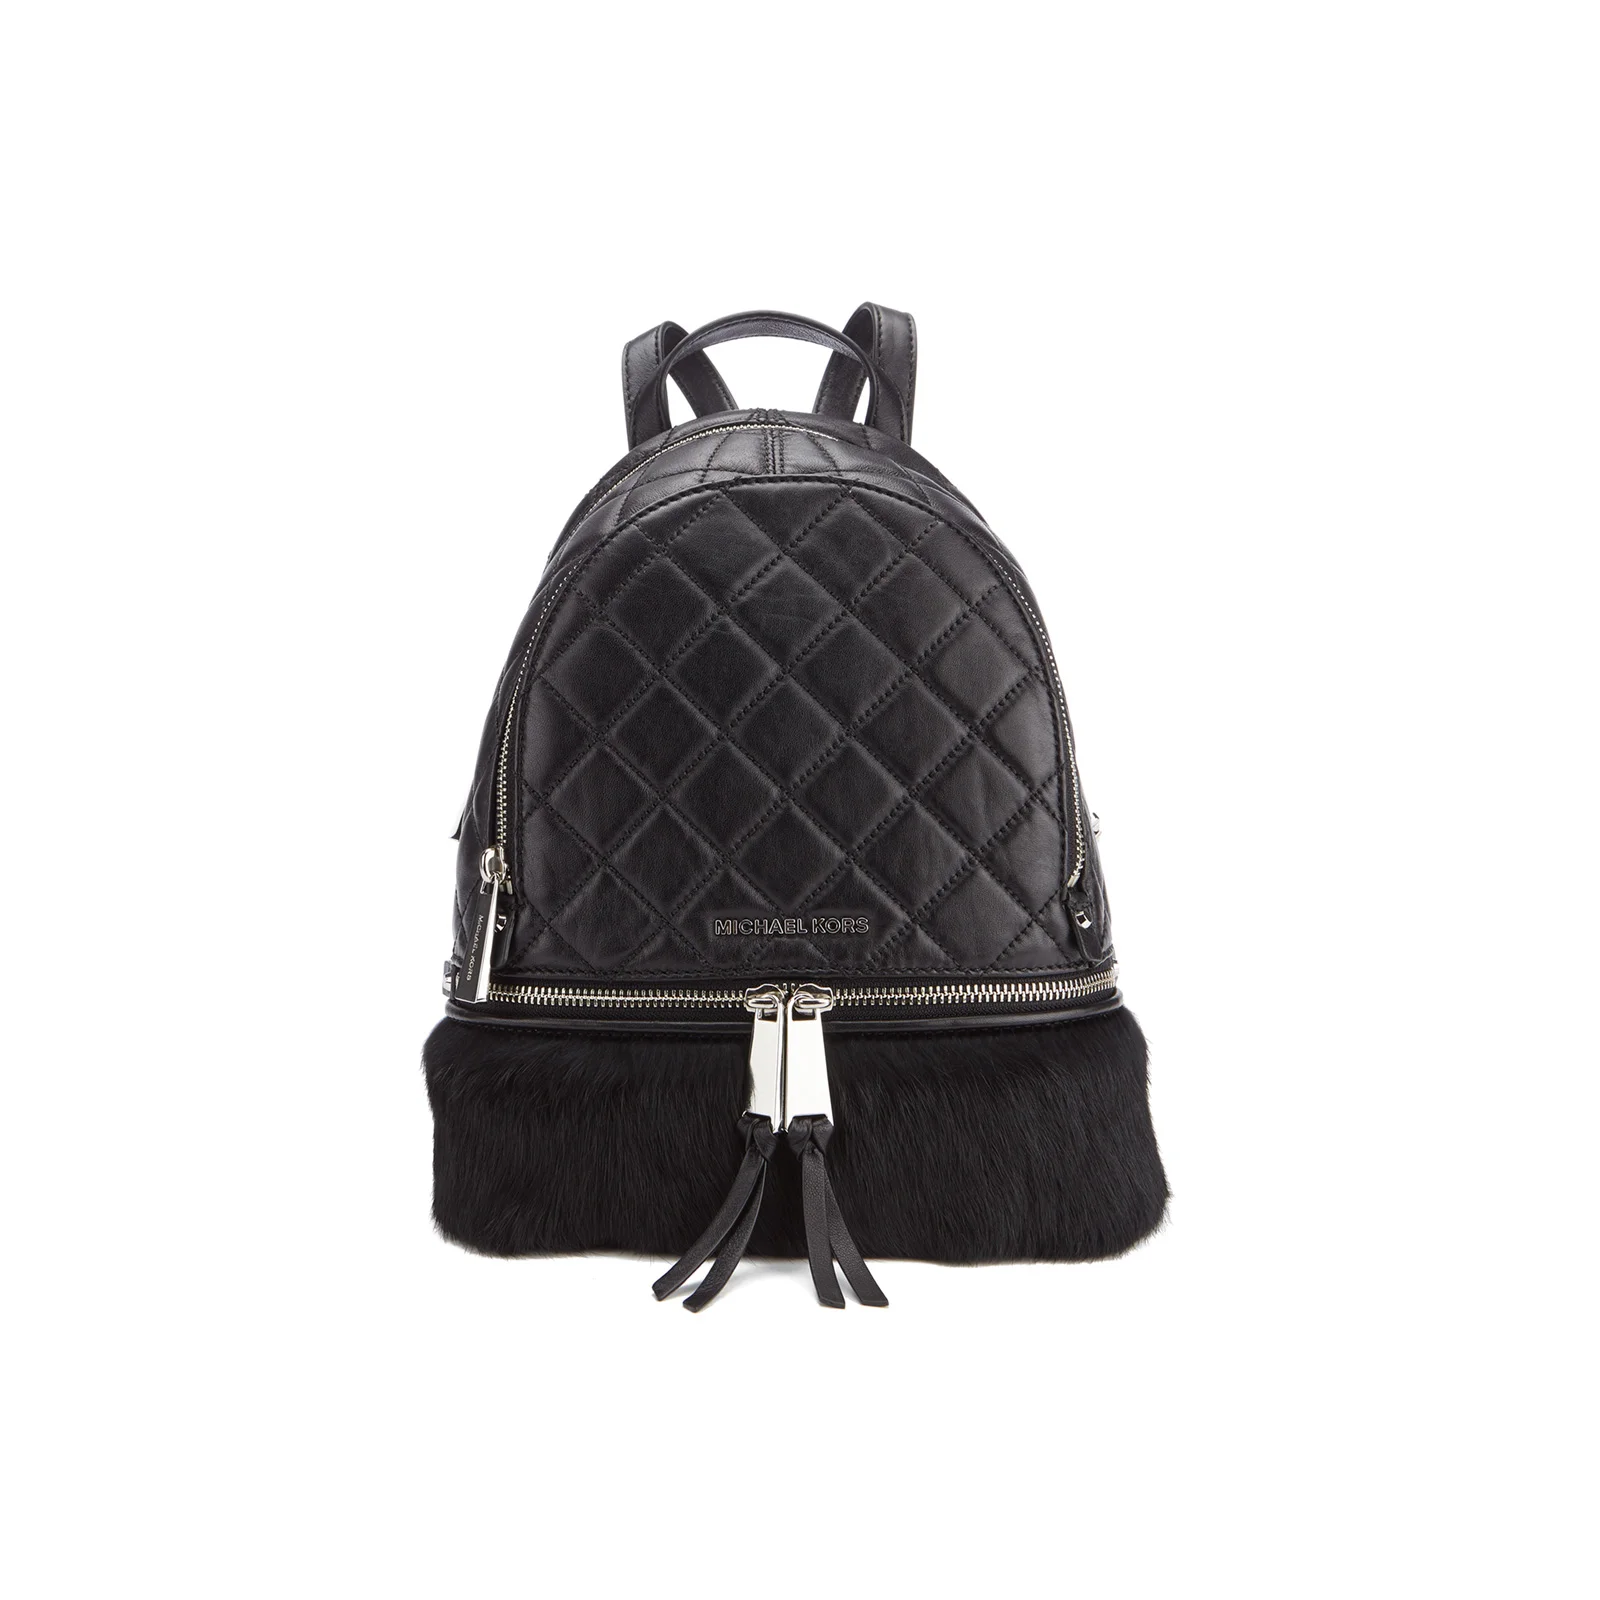 MICHAEL MICHAEL KORS Women's Small Fur Backpack - Black Image 1